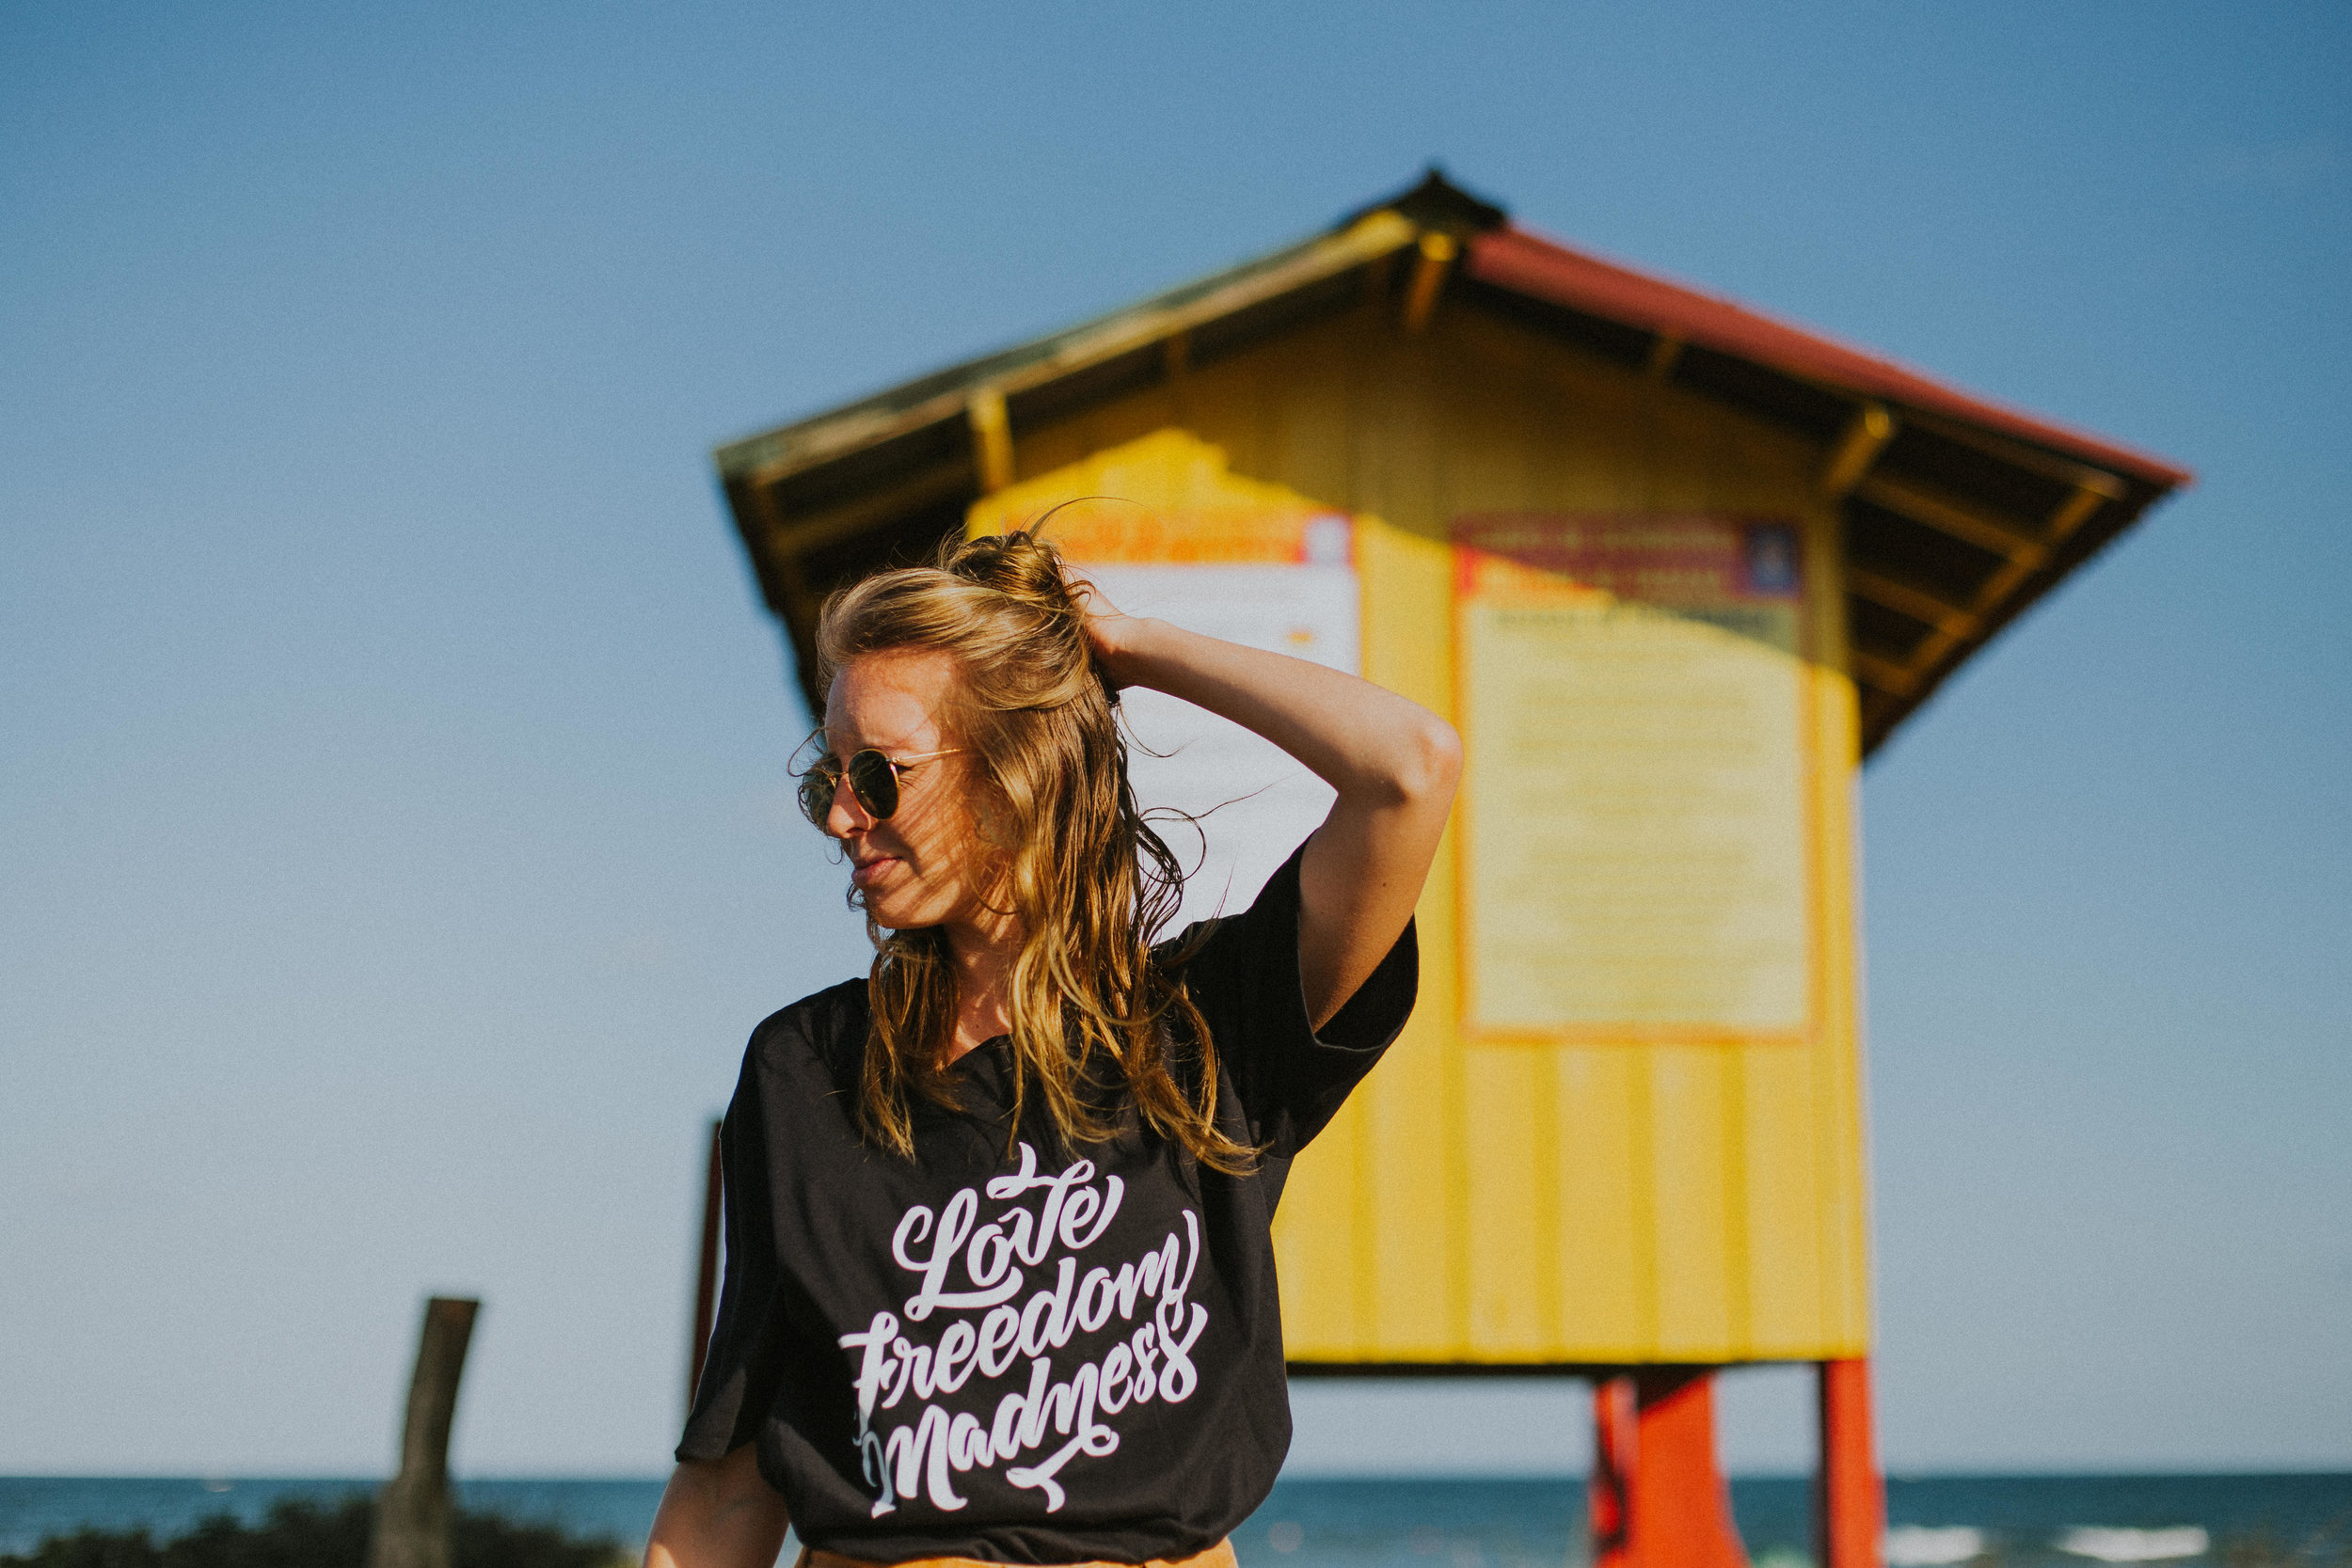 Gaby-Braun-Love-Freedom-Madness-Model-Brazil-t-shirt-beach-praia-ensaio-campanha-fotos-na-praia-ricardo-franzen-3.jpg